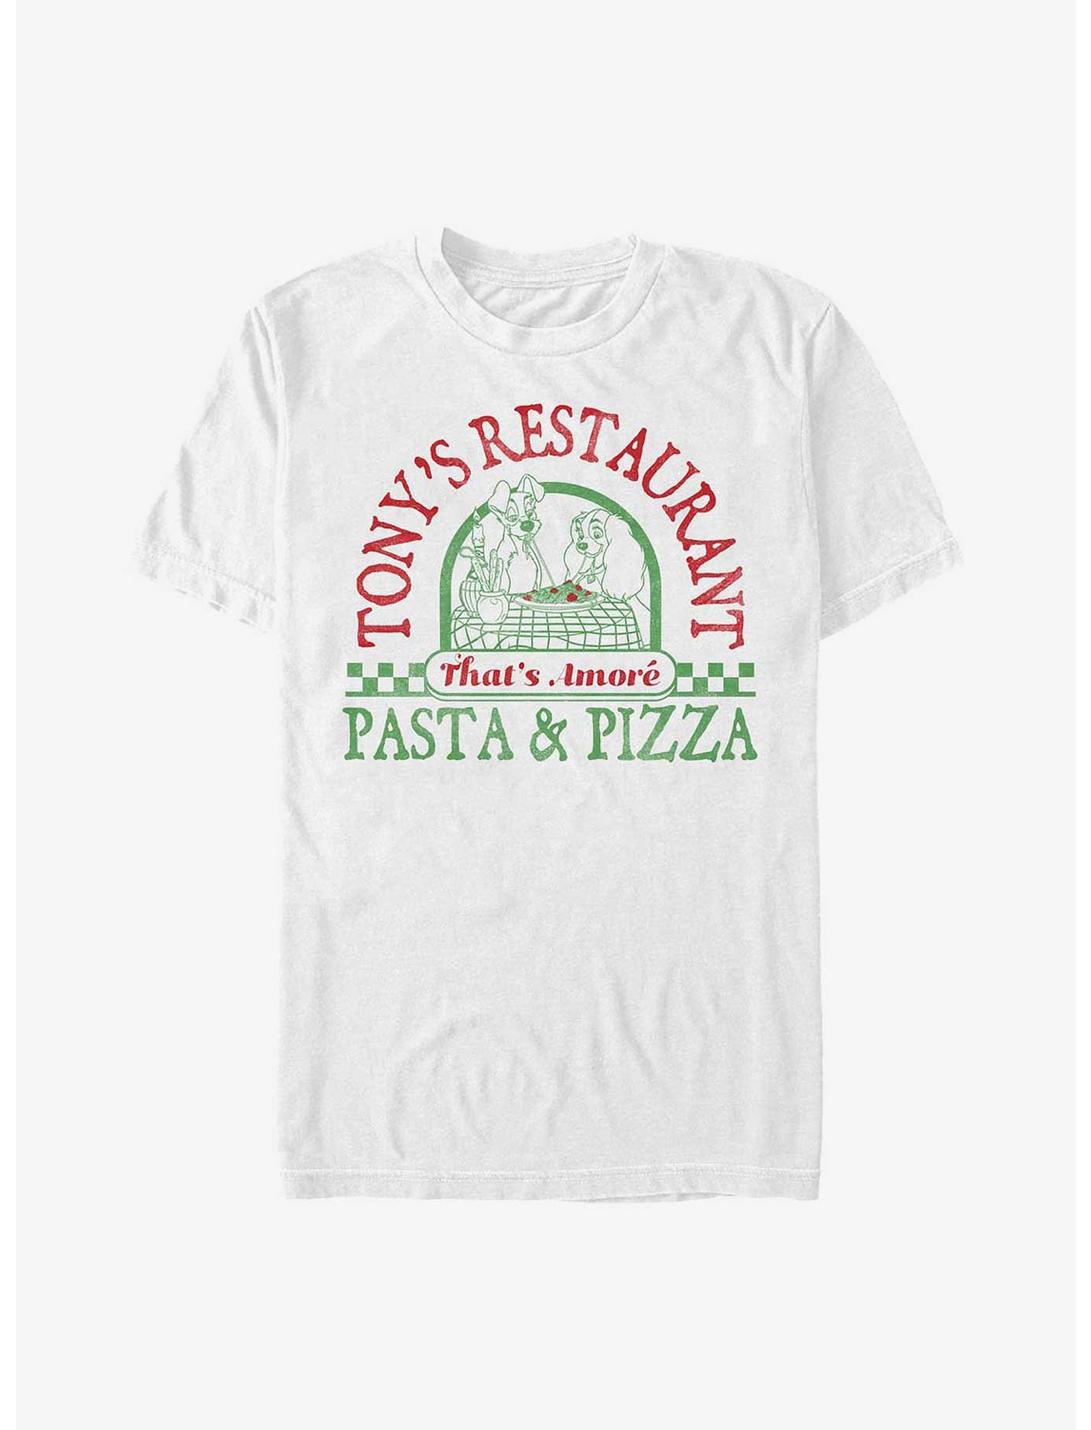 Disney Lady And The Tramp Tony's Restaurant Pasta & Pizza T-Shirt, WHITE, hi-res